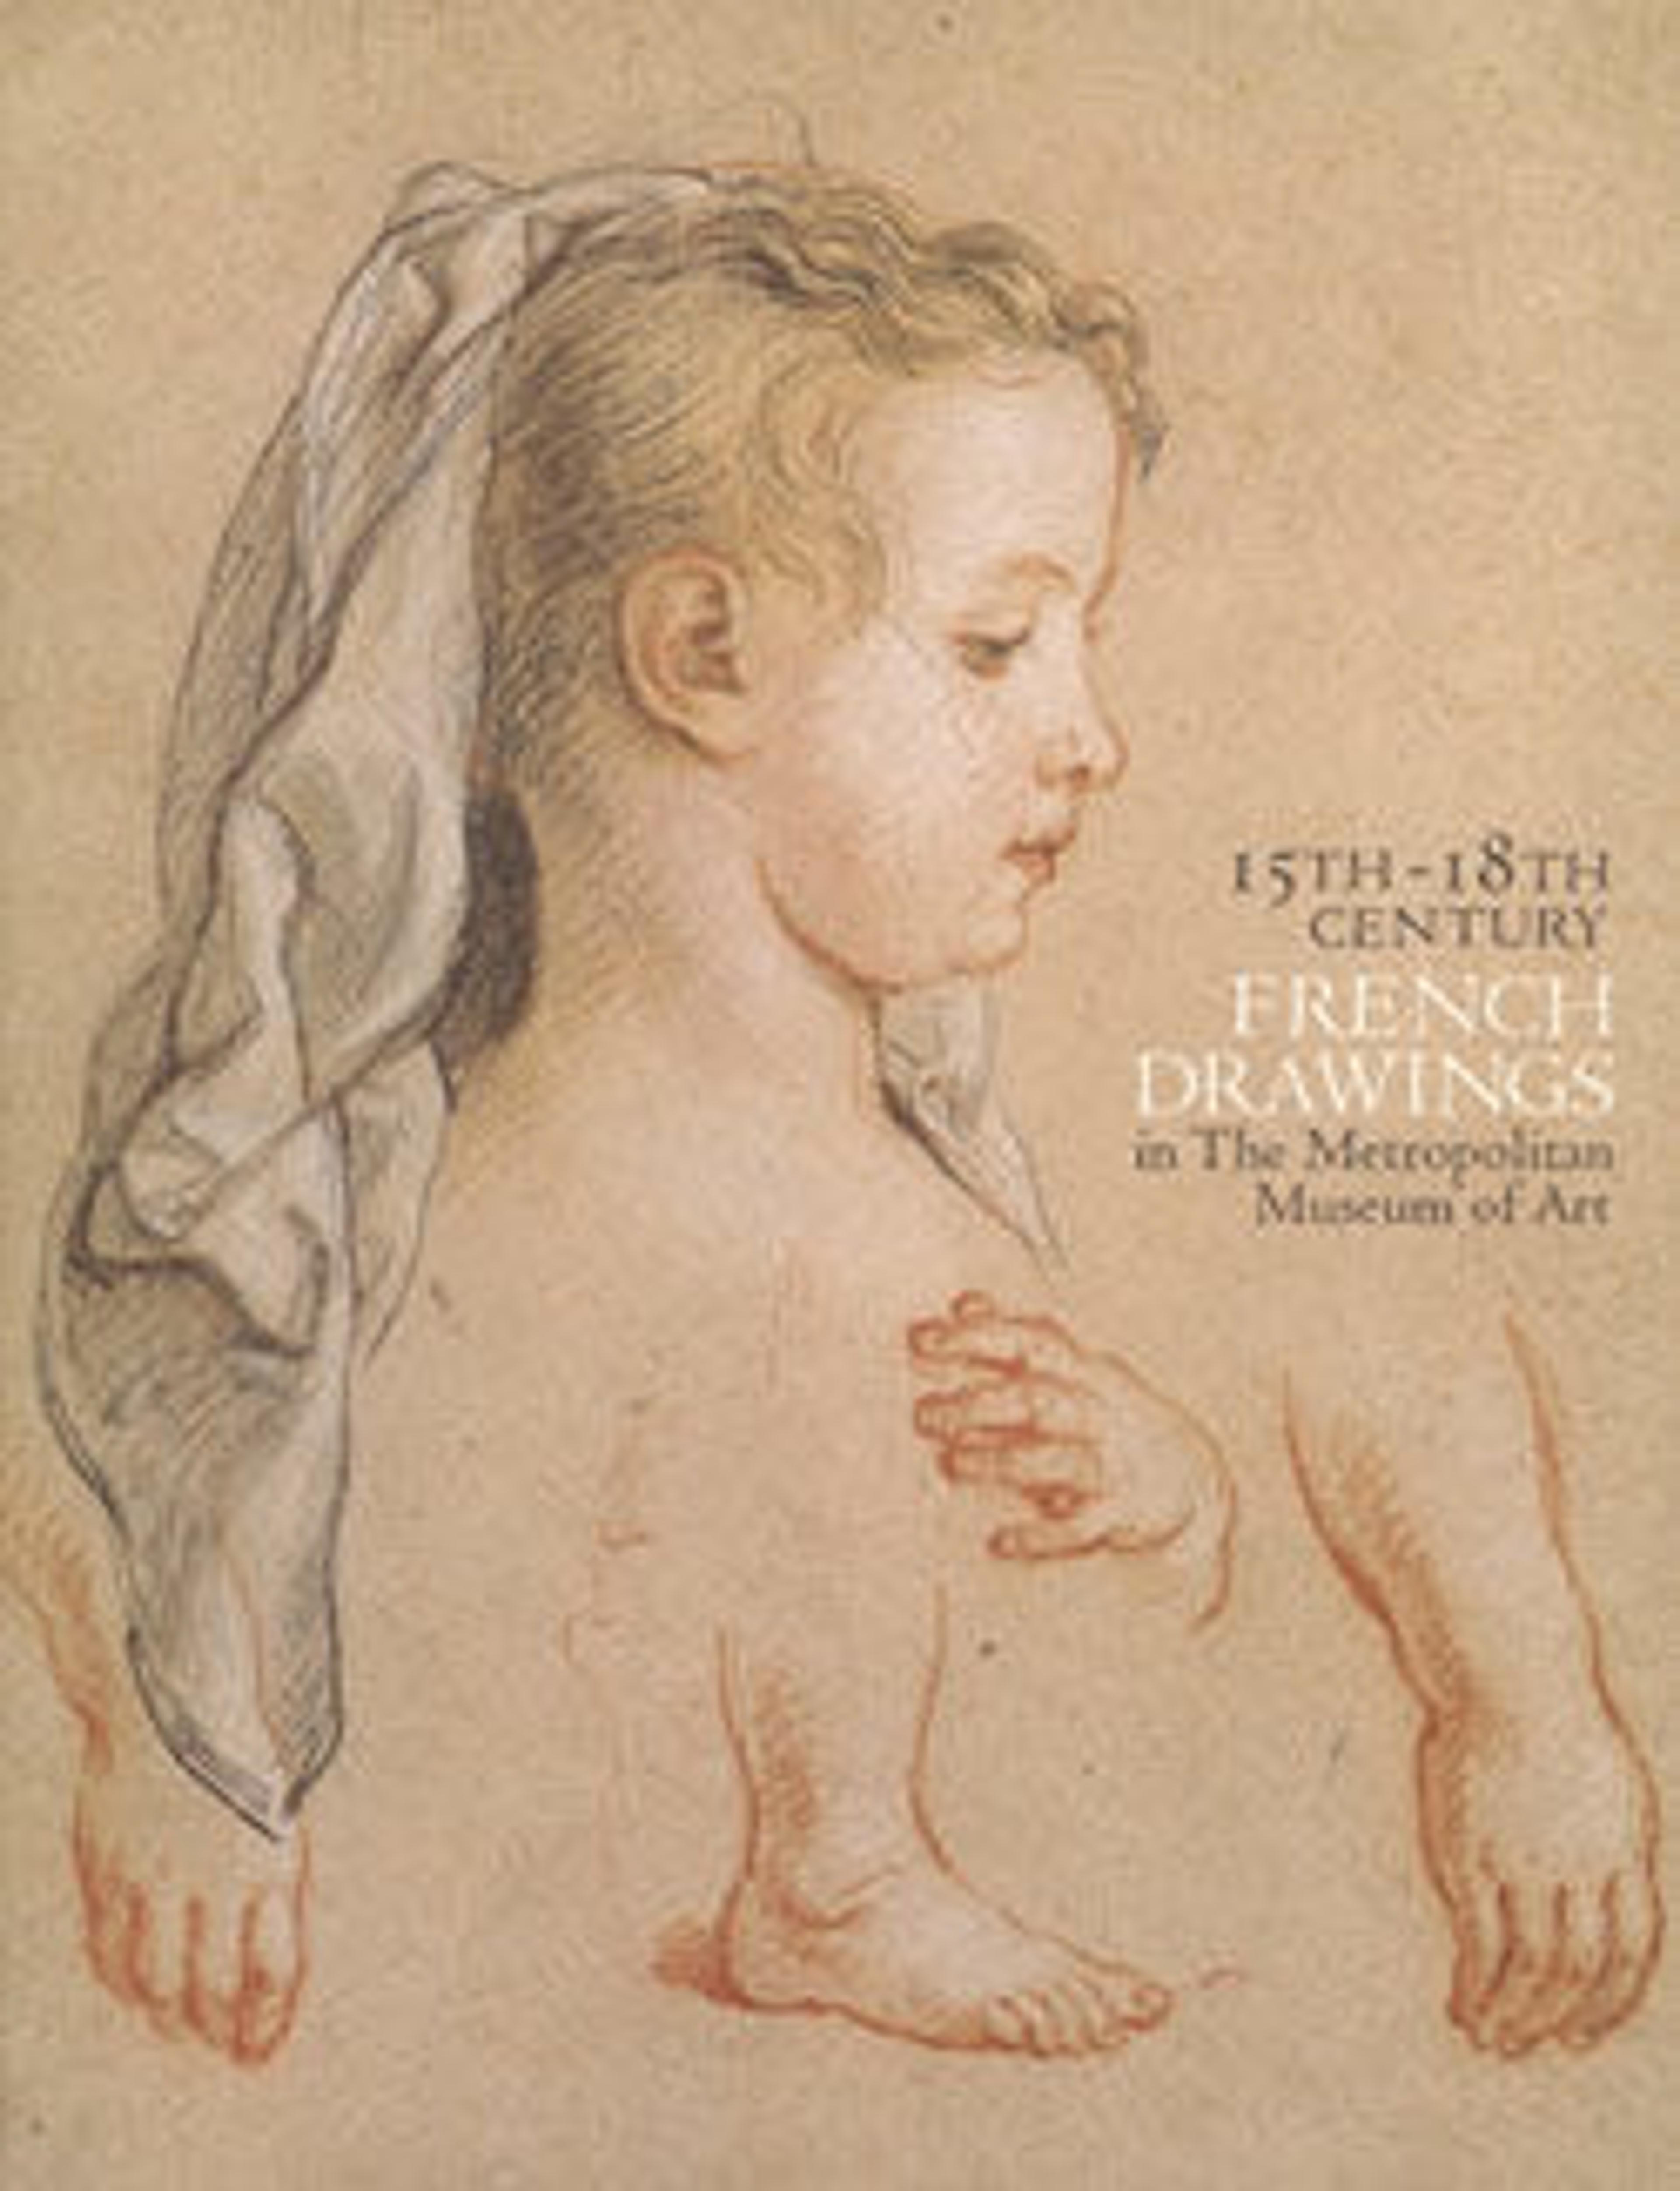 Fifteenth-Eighteenth Century French Drawings in The Metropolitan Museum of Art